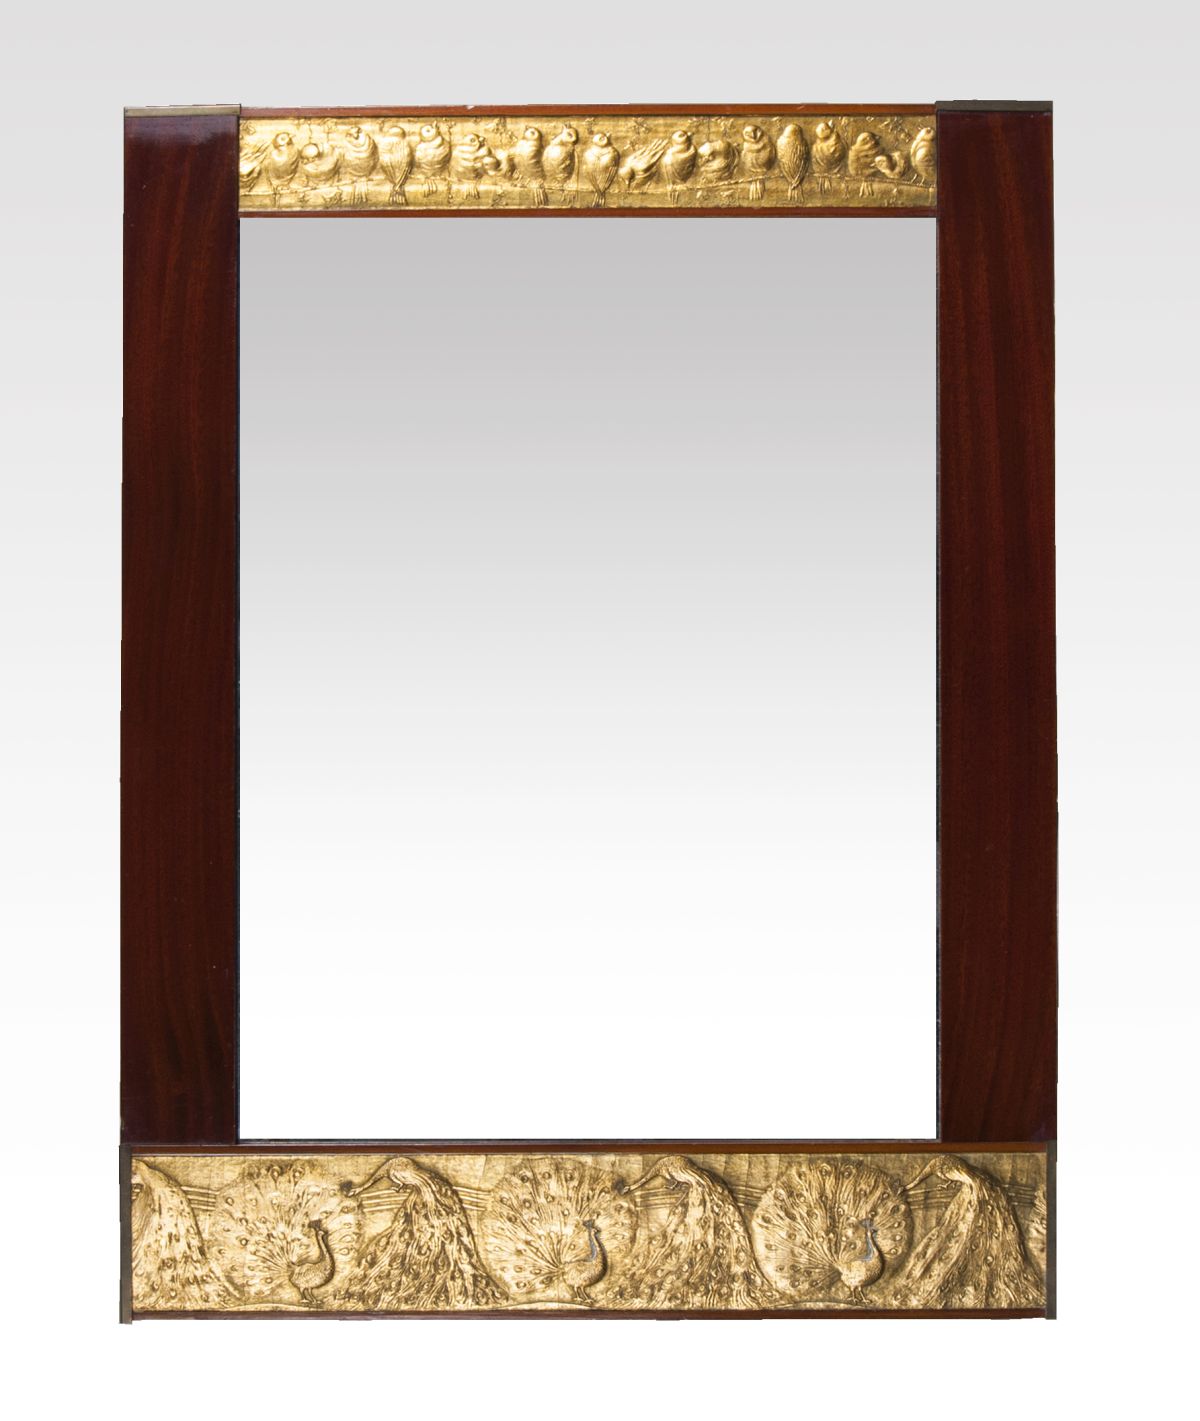 An Art Nouveau Mirror with Brass Ornaments